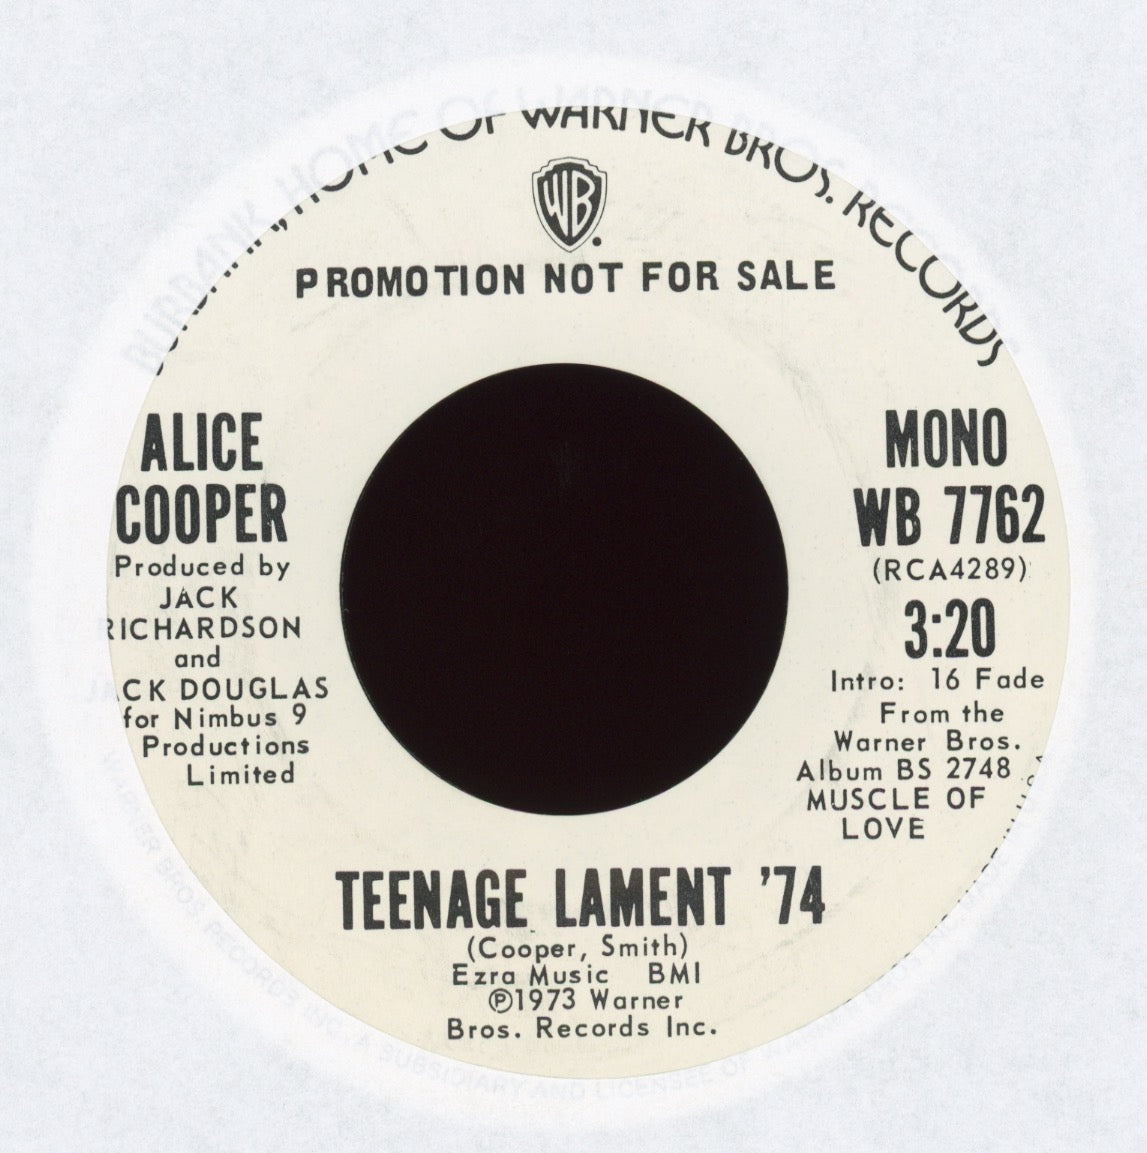 Alice Cooper - Teenage Lament '74 on Warner Bros Promo